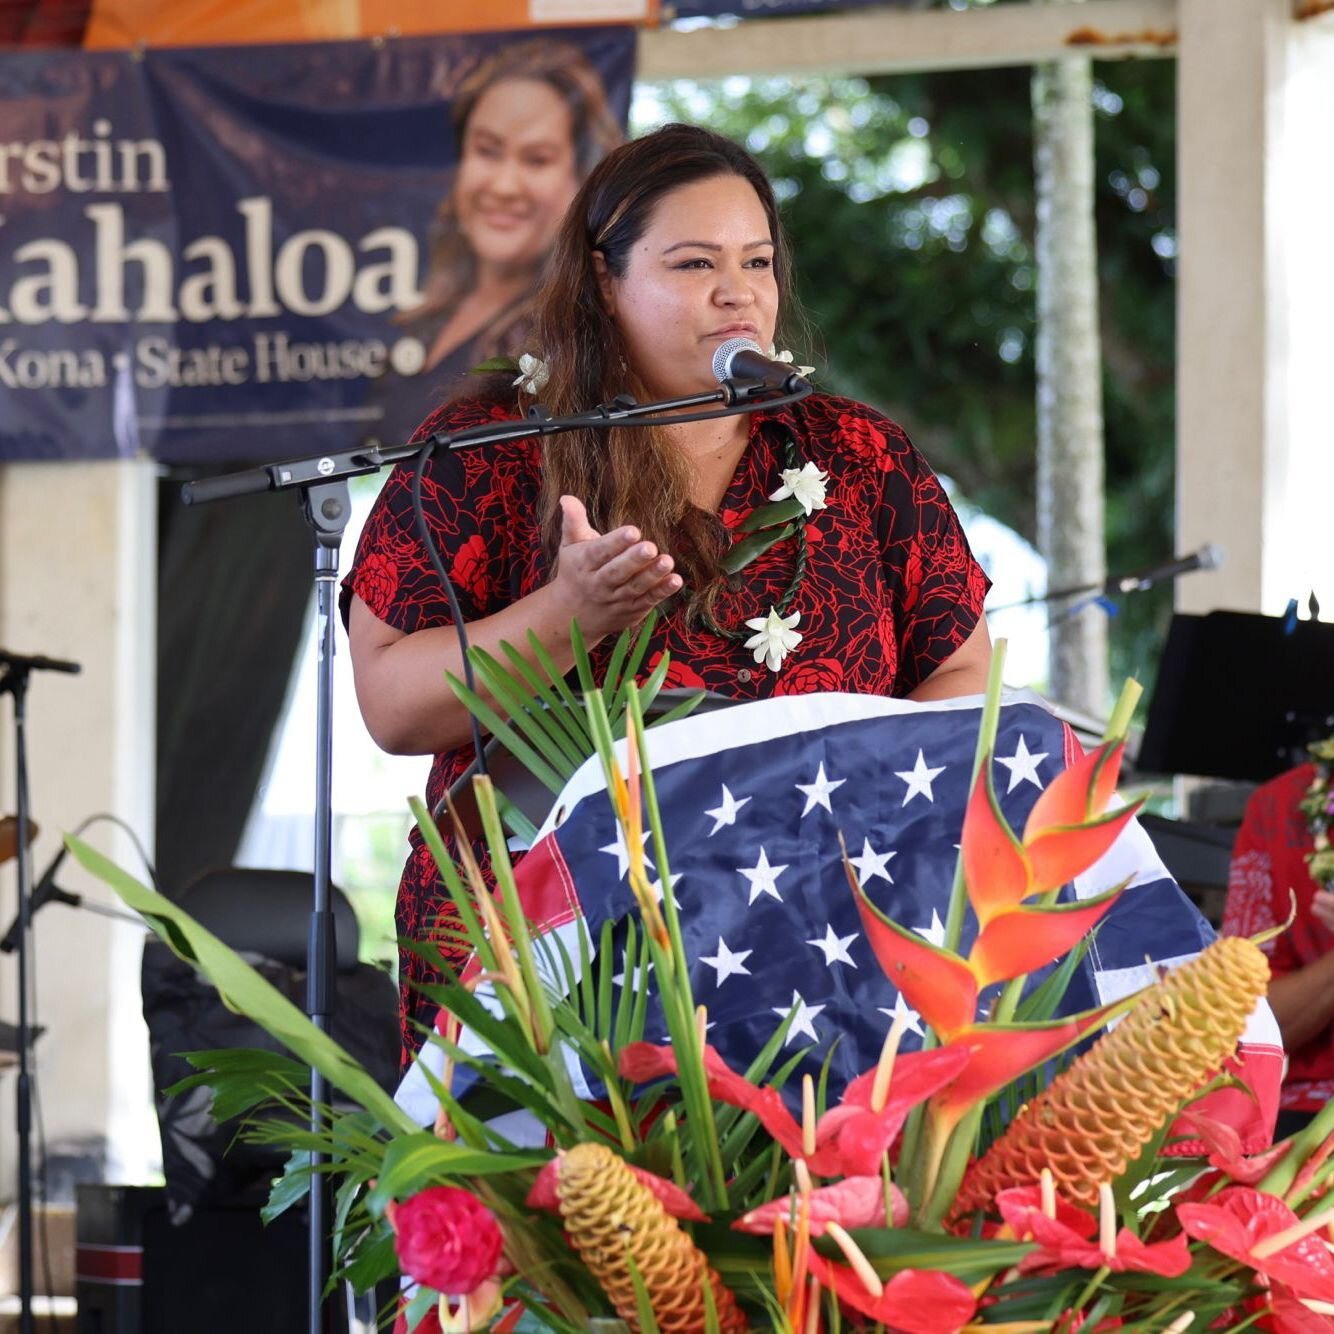 Hauʻoli lā hānau: happy birthday to our Honorable Representative! We&rsquo;re all so proud of you! - Team Kahaloa